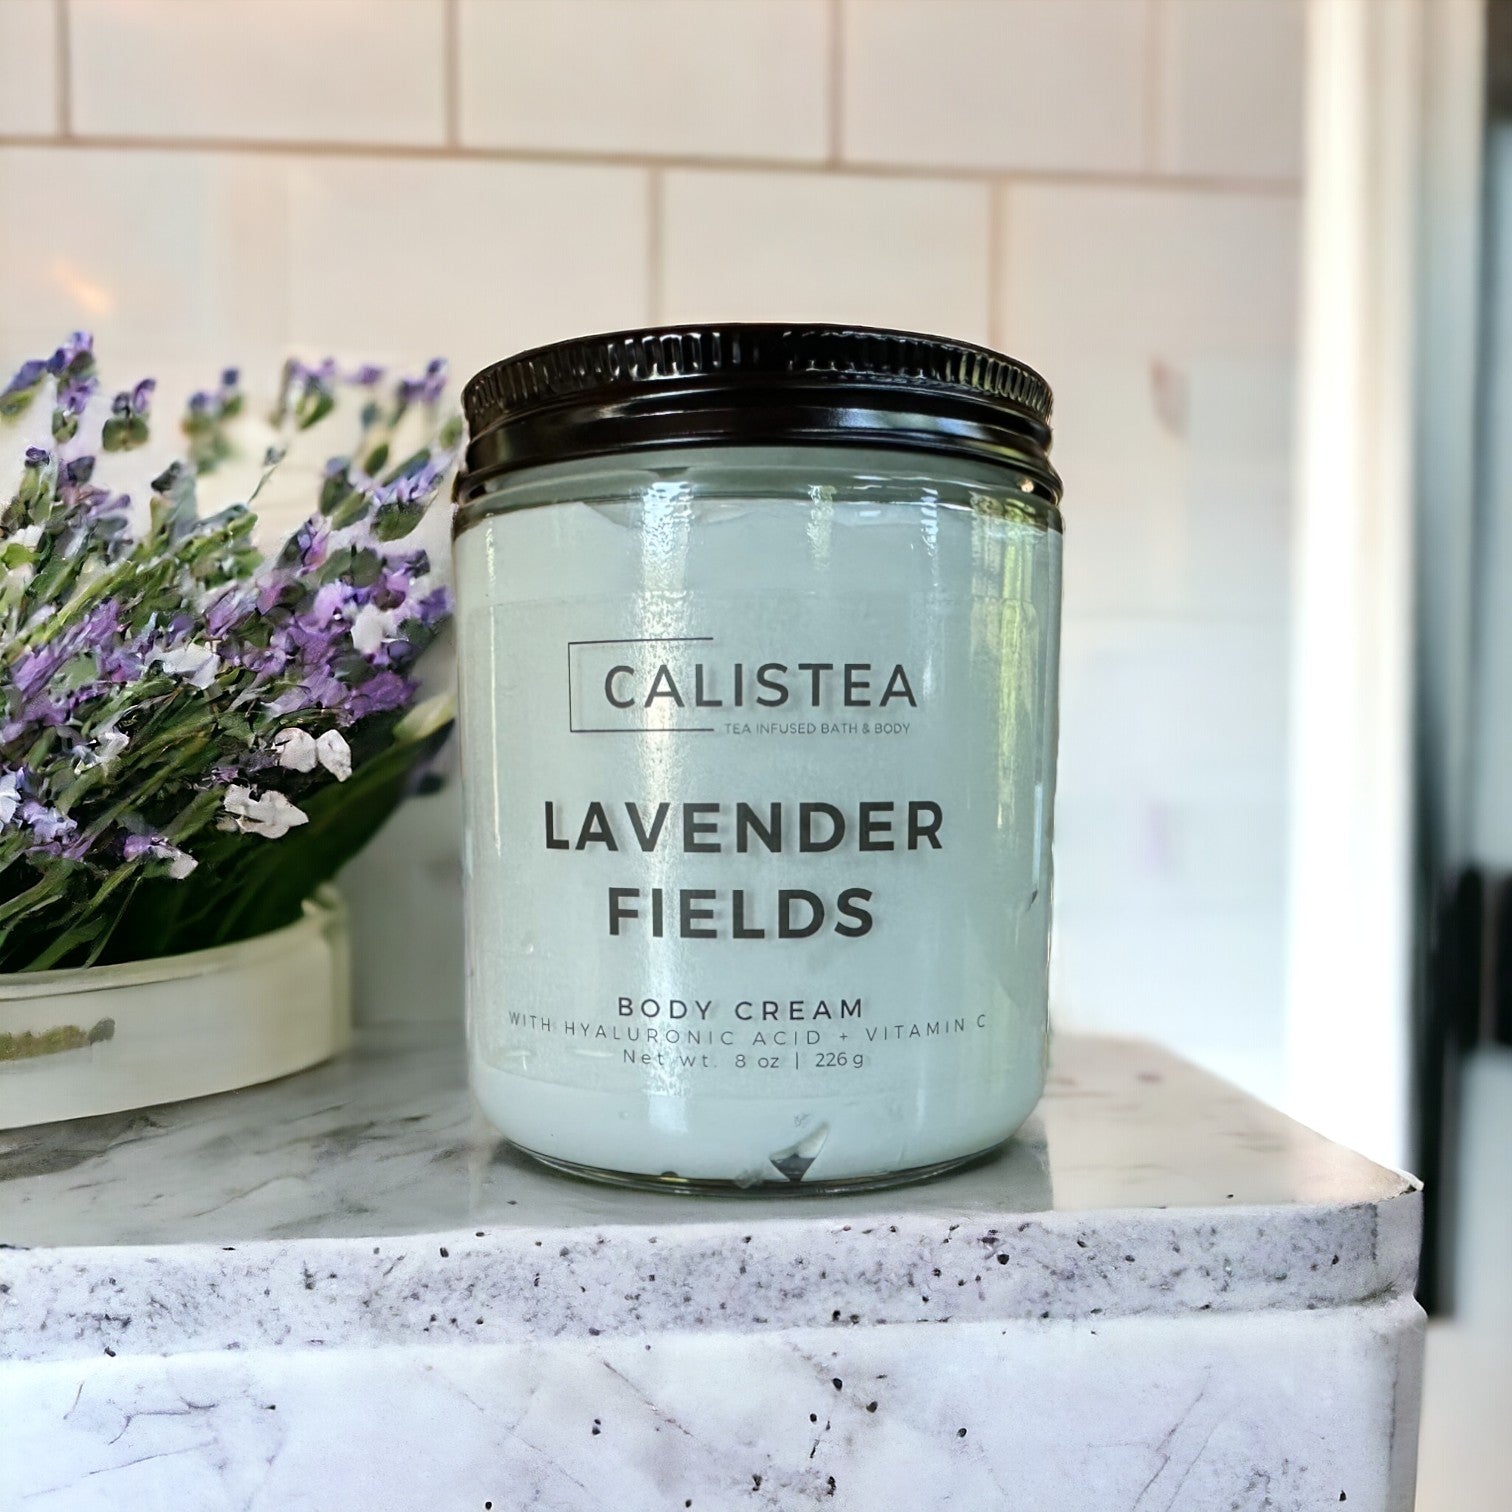 Lavender Fields - Calistea8 oz by volume